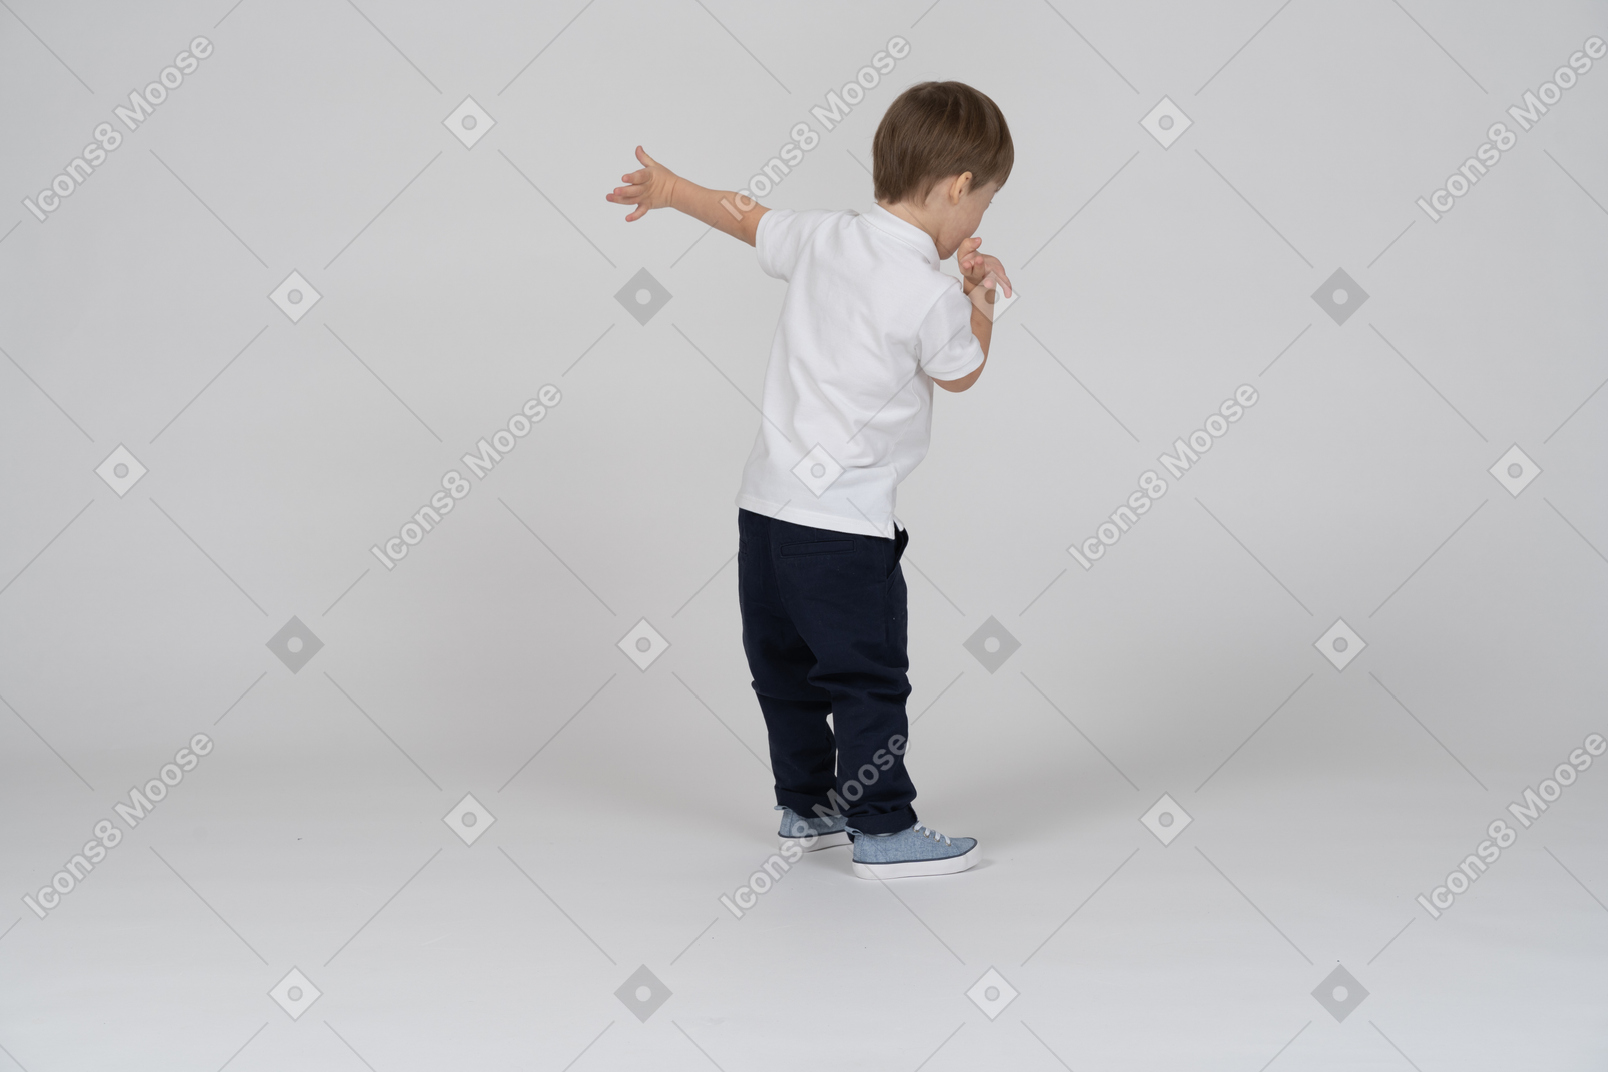 Rear view of a little boy gesturing